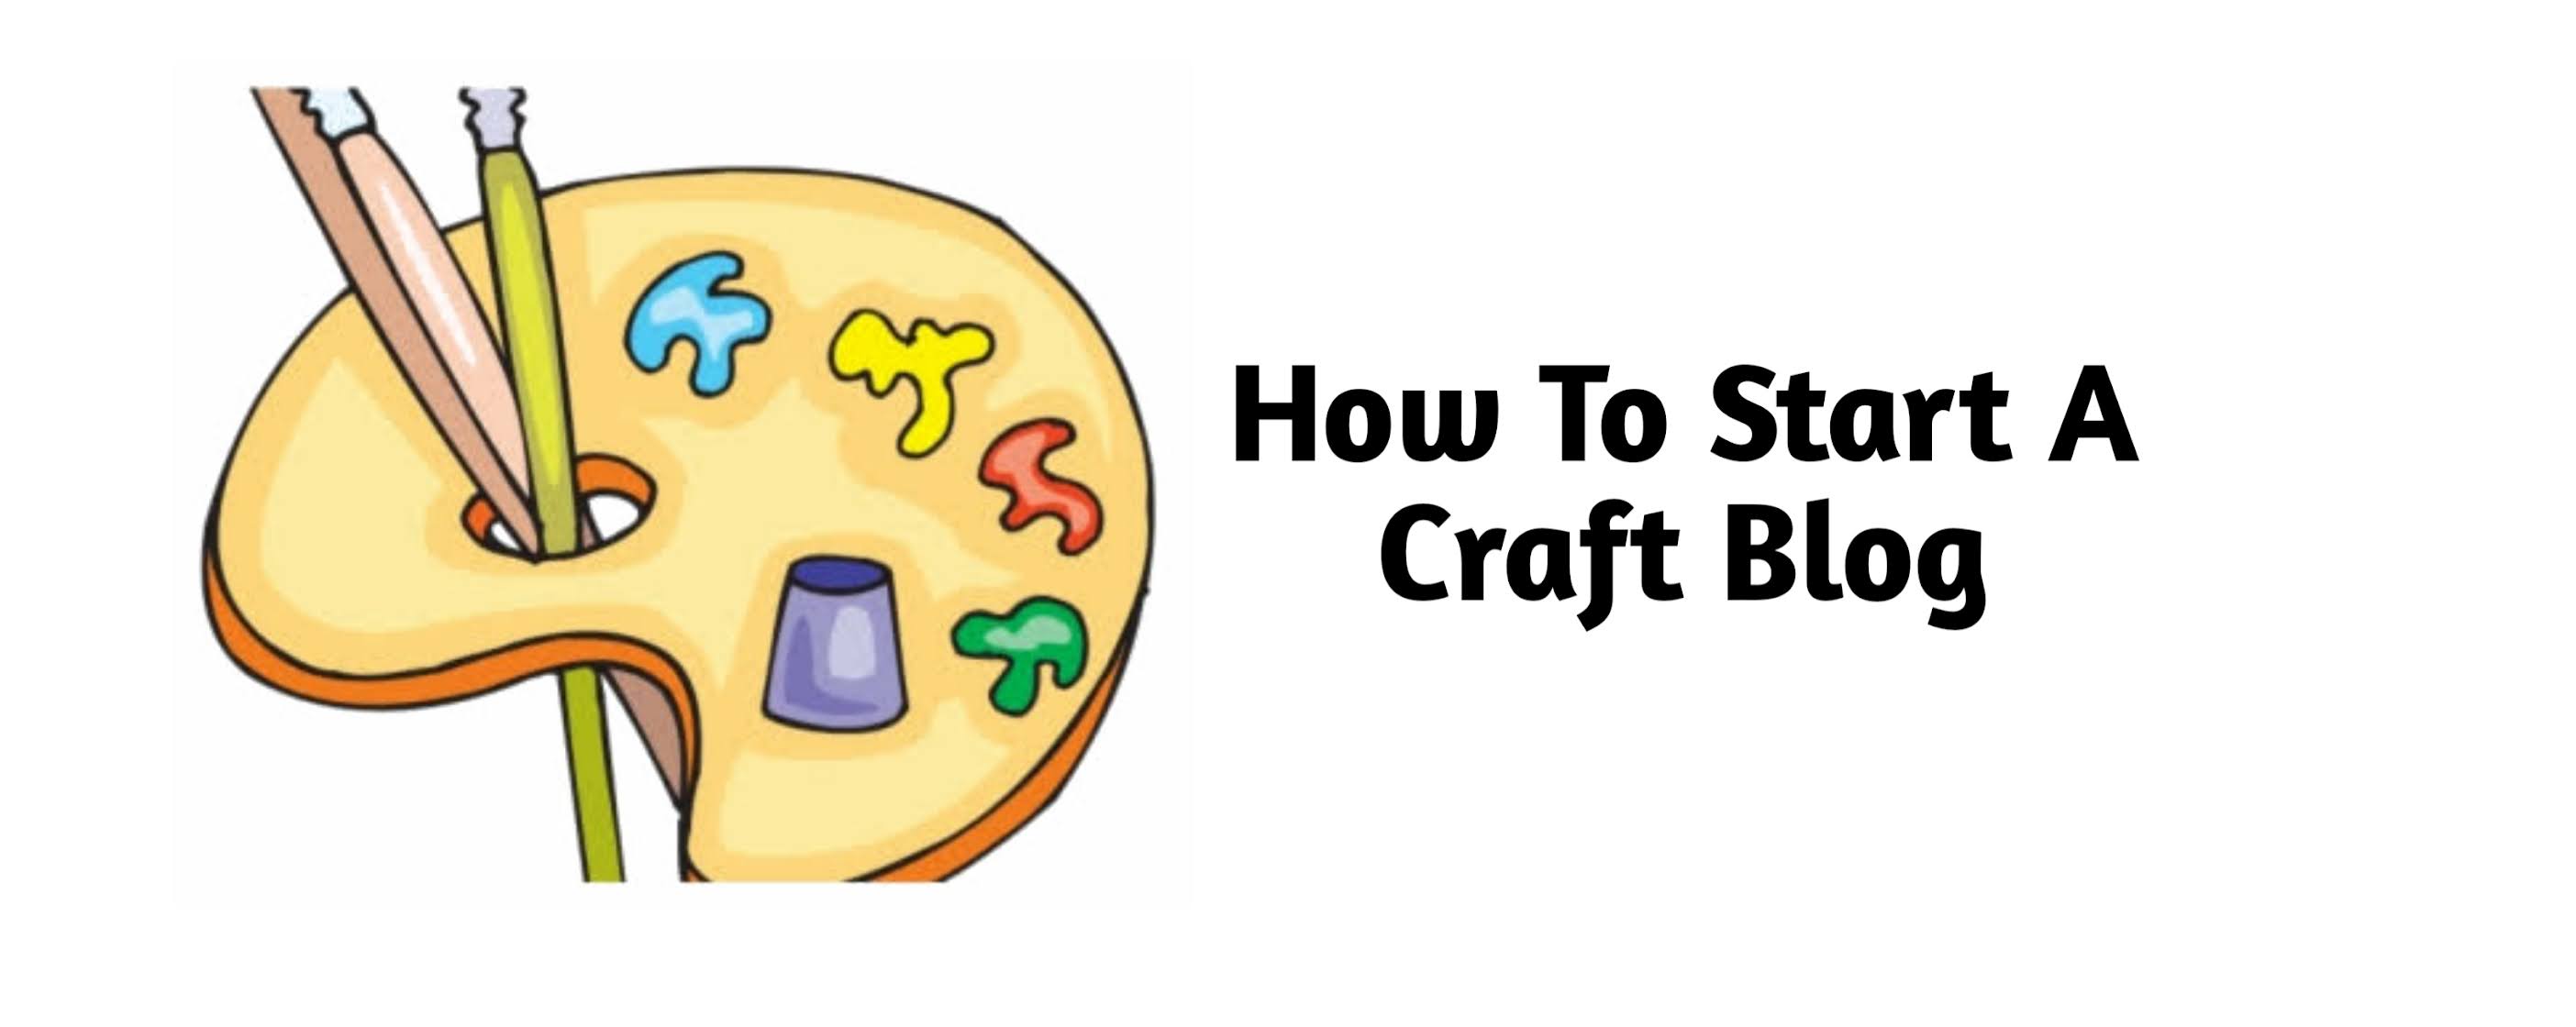 How To Start A Craft Blog